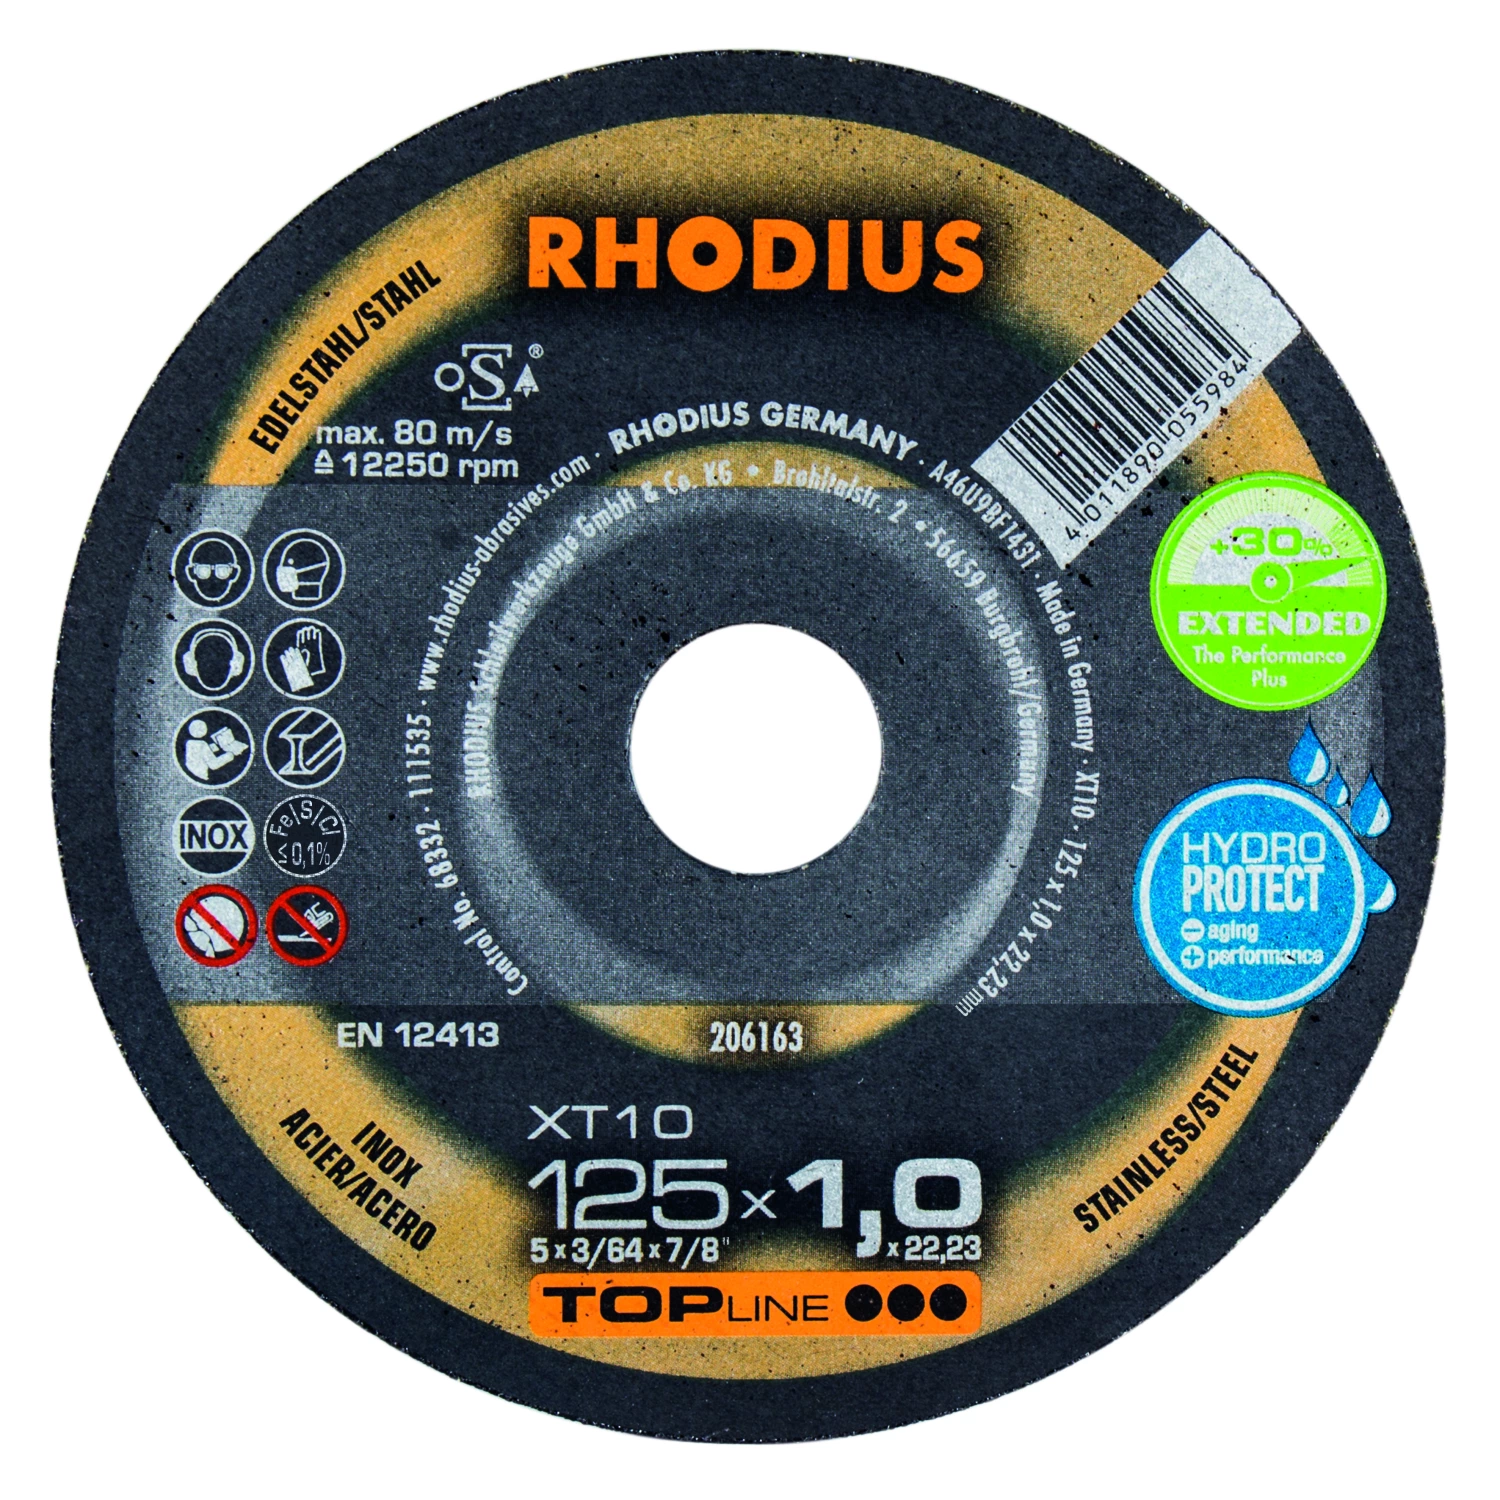 Rhodius 206163 XT10 TOPline lll Disque à tronçonner extra fin 125 x 22,23 x 1,0mm (50 pcs)